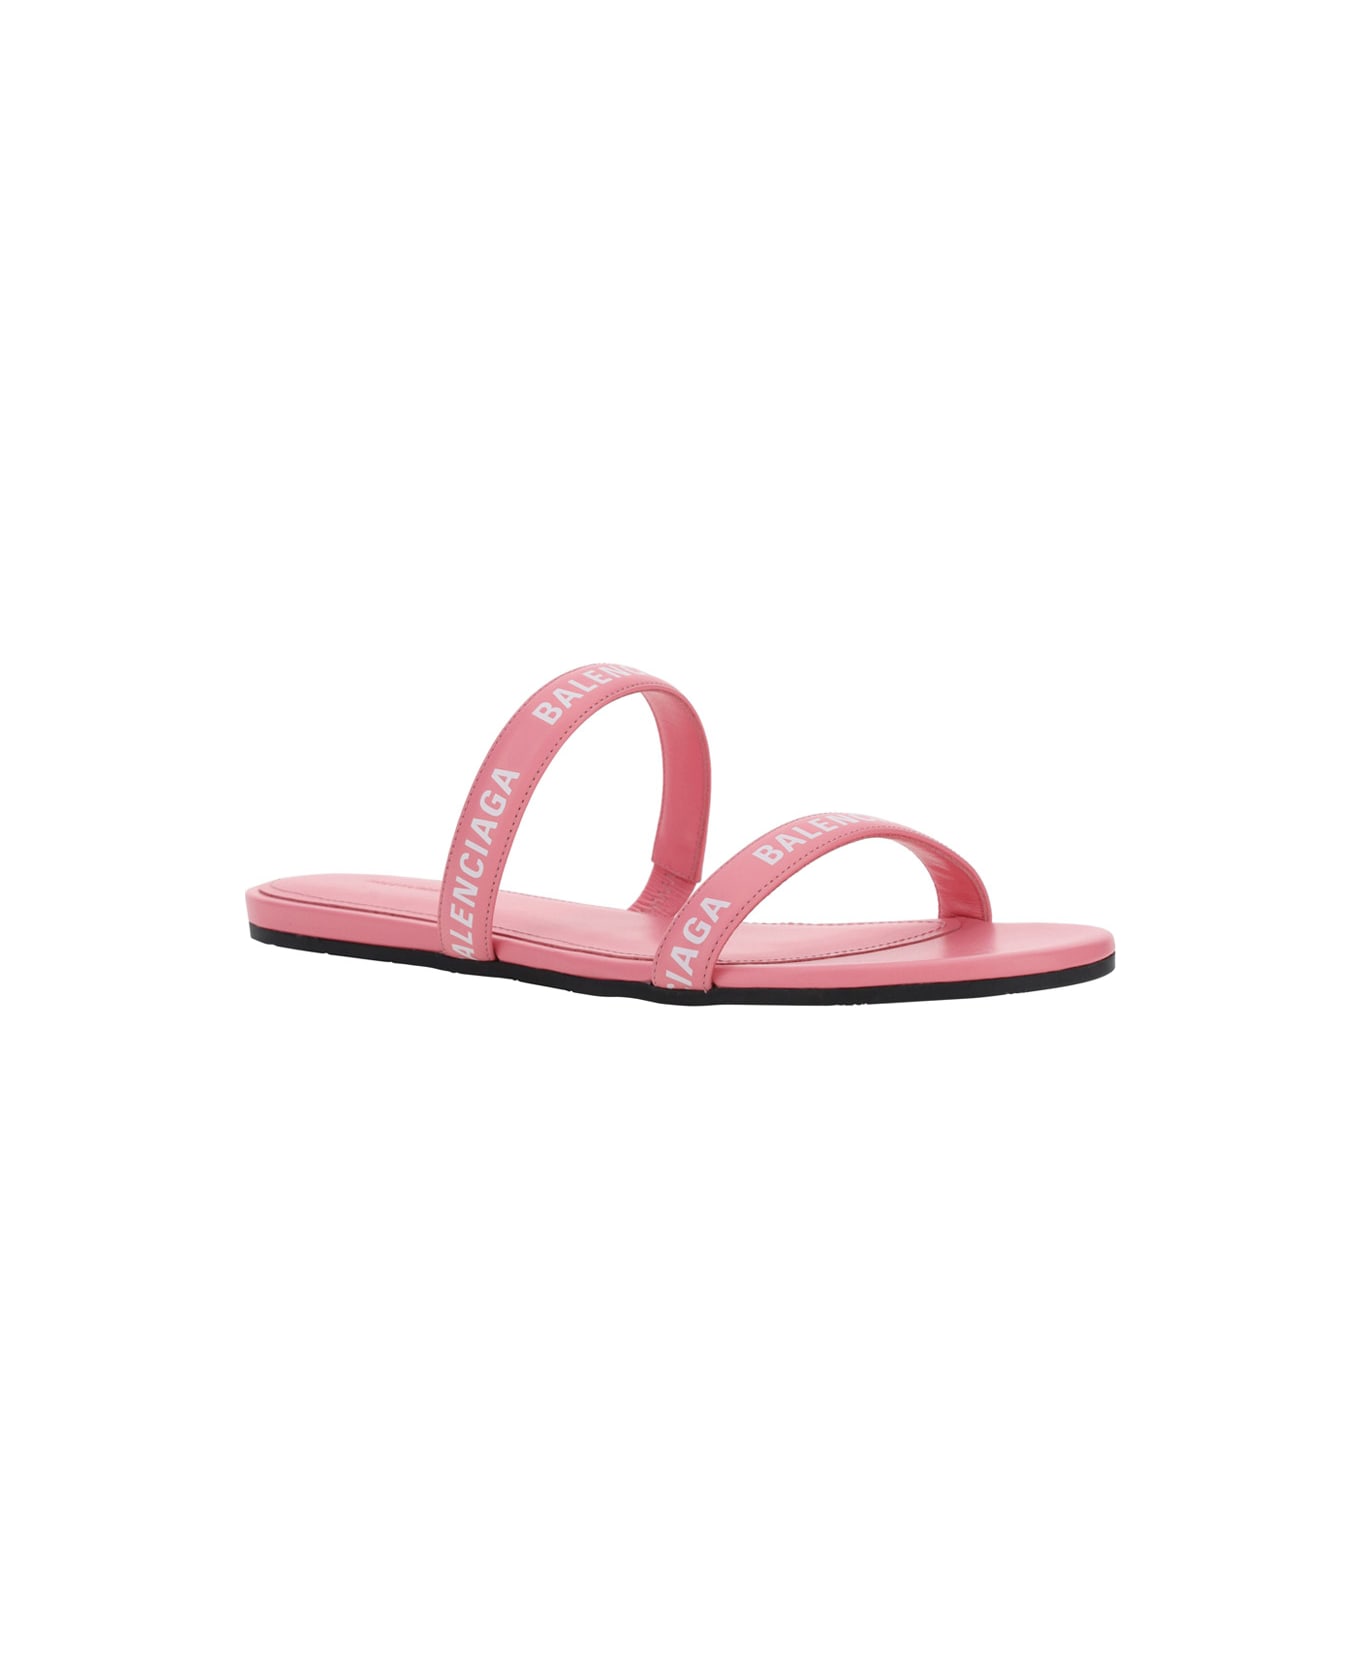 Balenciaga Round Sandal - Sweet pink/white